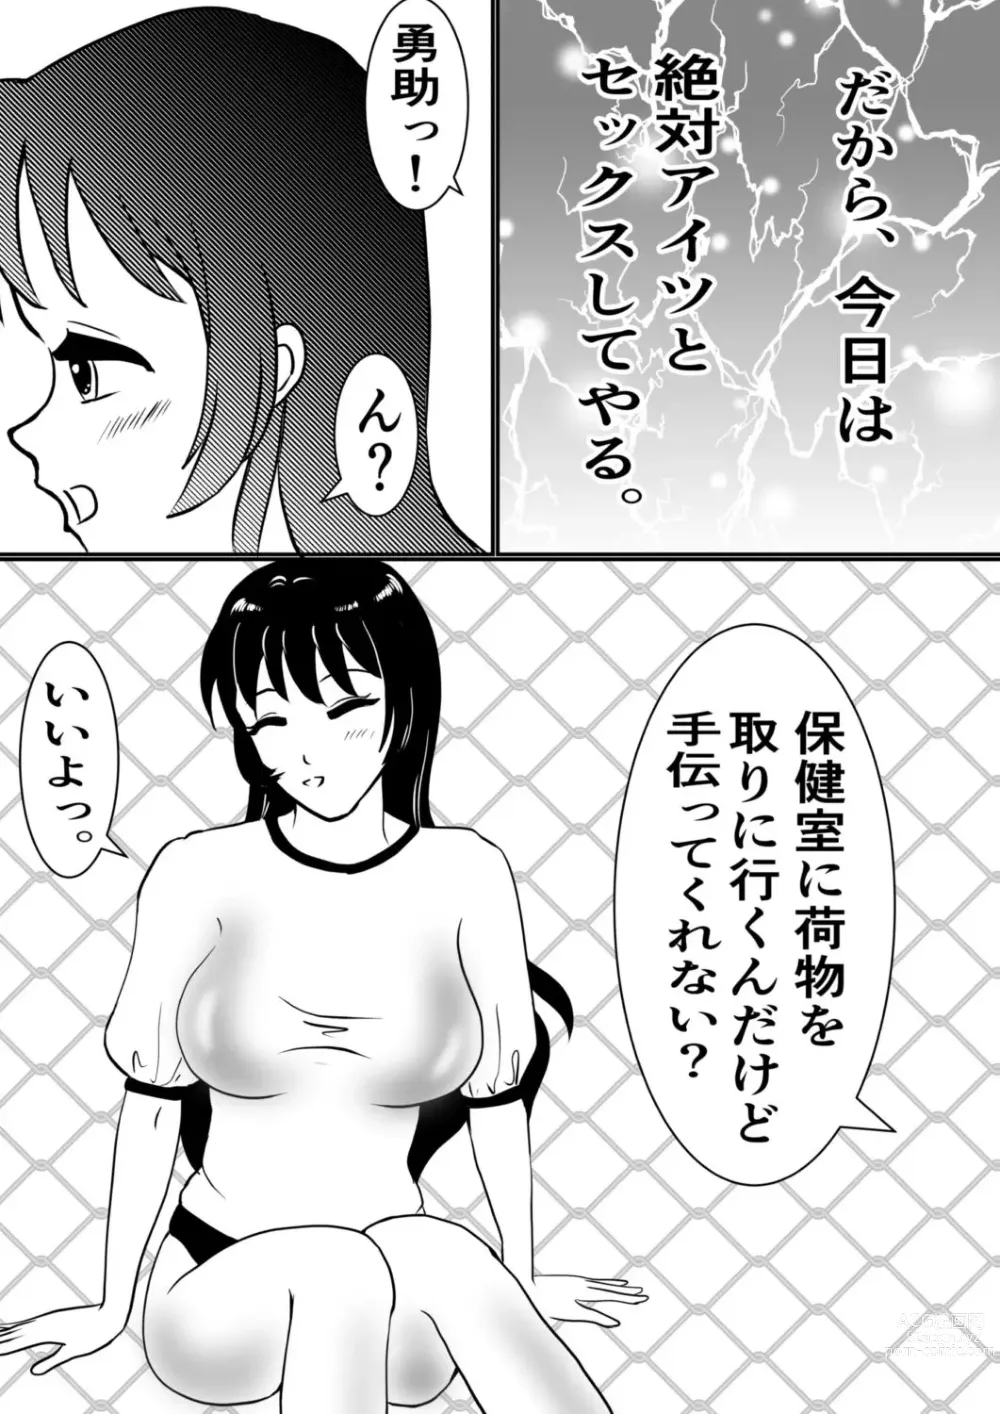 Page 19 of doujinshi 皮をかぶった親友が最高のセフレになった話。